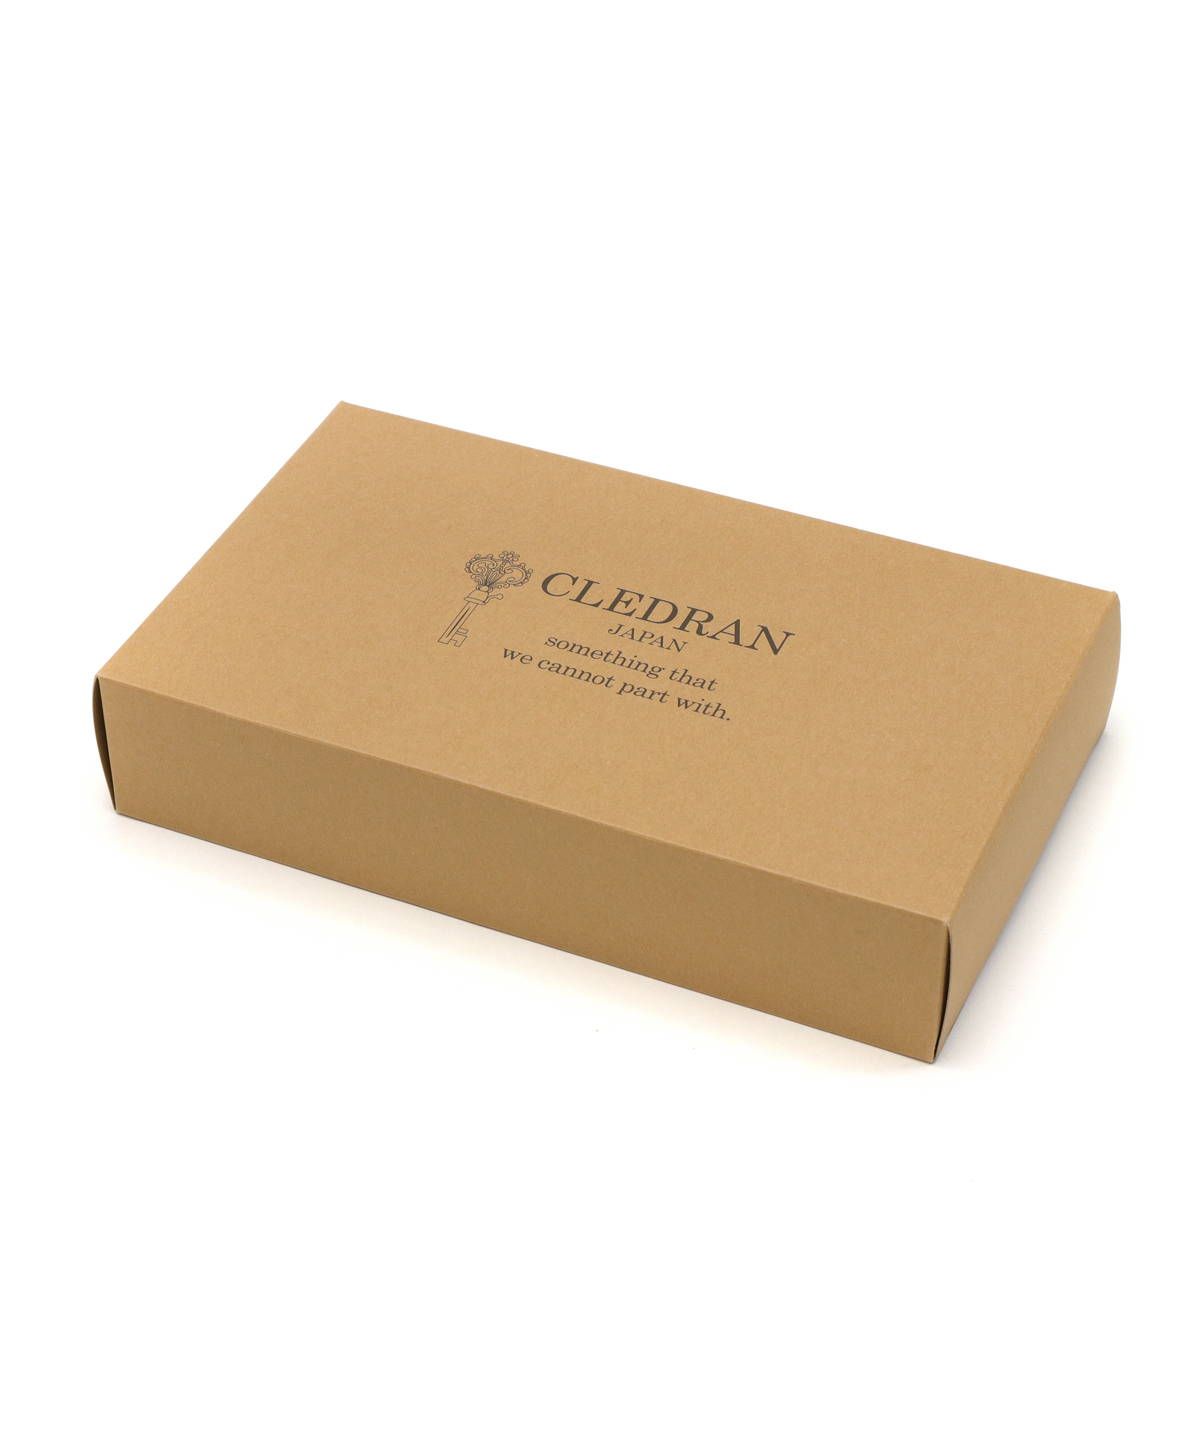 CLEDRAN クレドラン CLEDRAN RAY WALLET レイ ウォレット 二つ折財布 当店限定カラーベージュストライプ 日本製 cl3210  ラウンド